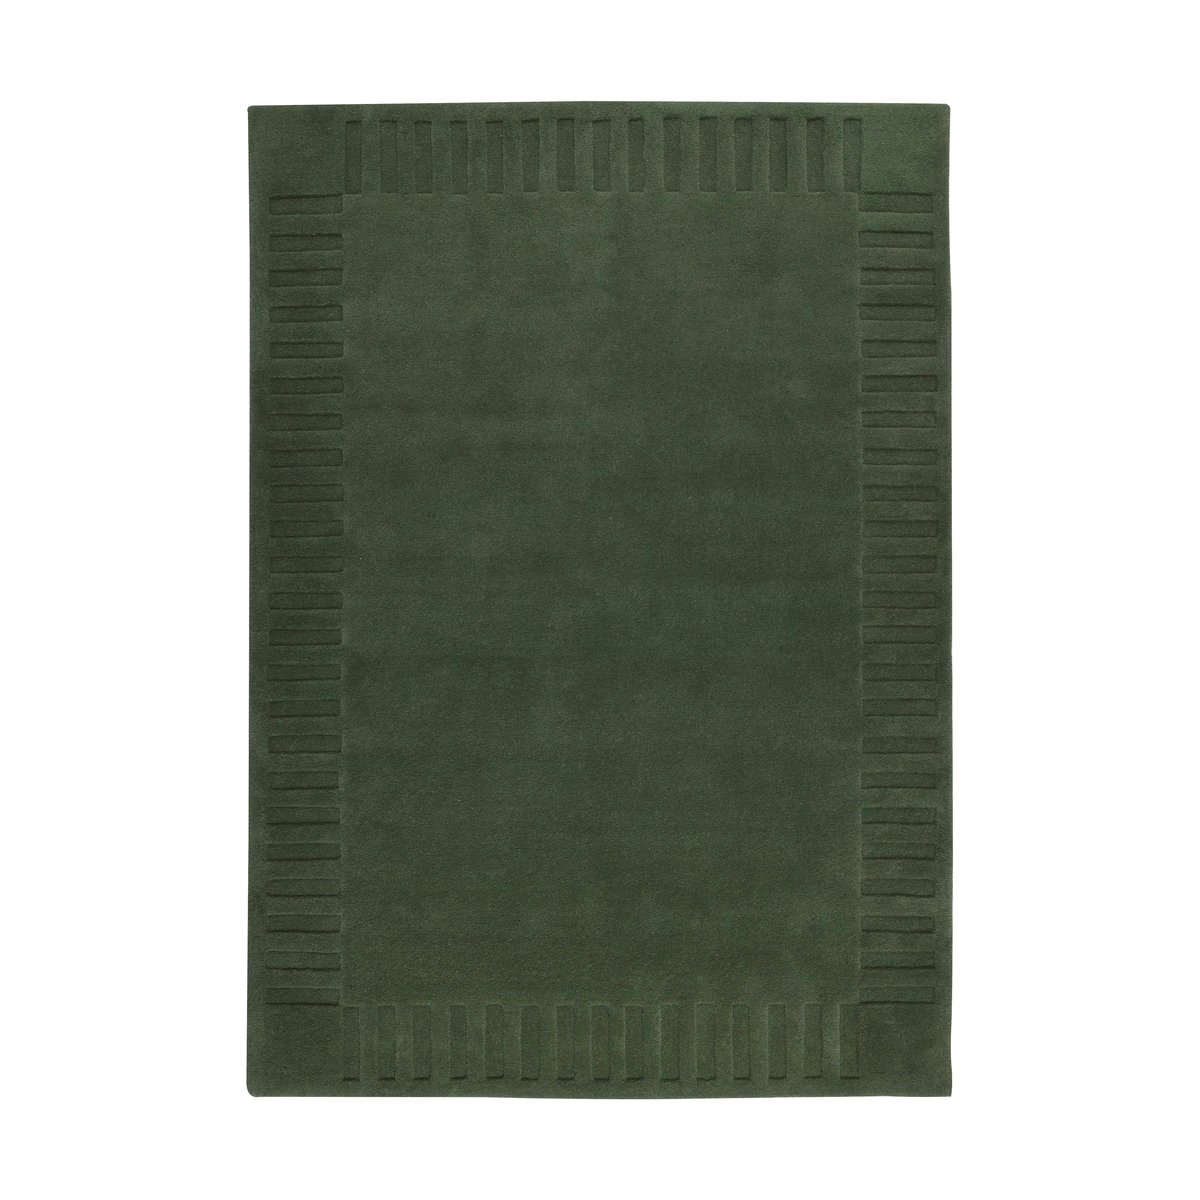 Kateha Lea original wollen vloerkeed Green-18, 170x240 cm